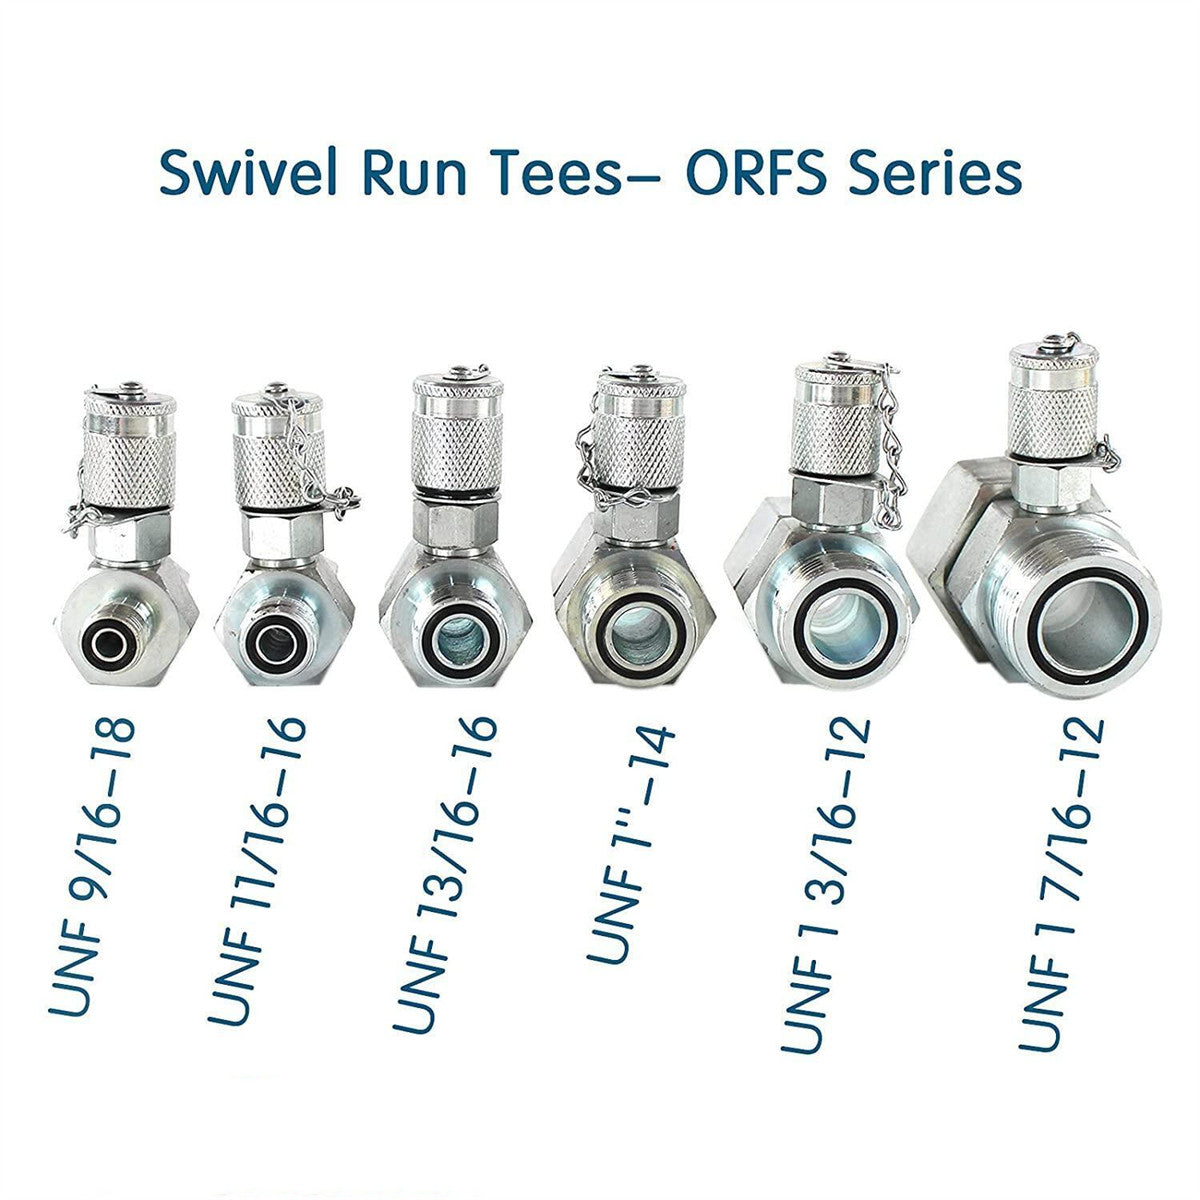 6PCS ORFS Hydraulic Swivel Run Tees, Test Coupling Set Tee Connector for Excavator - Sinocmp